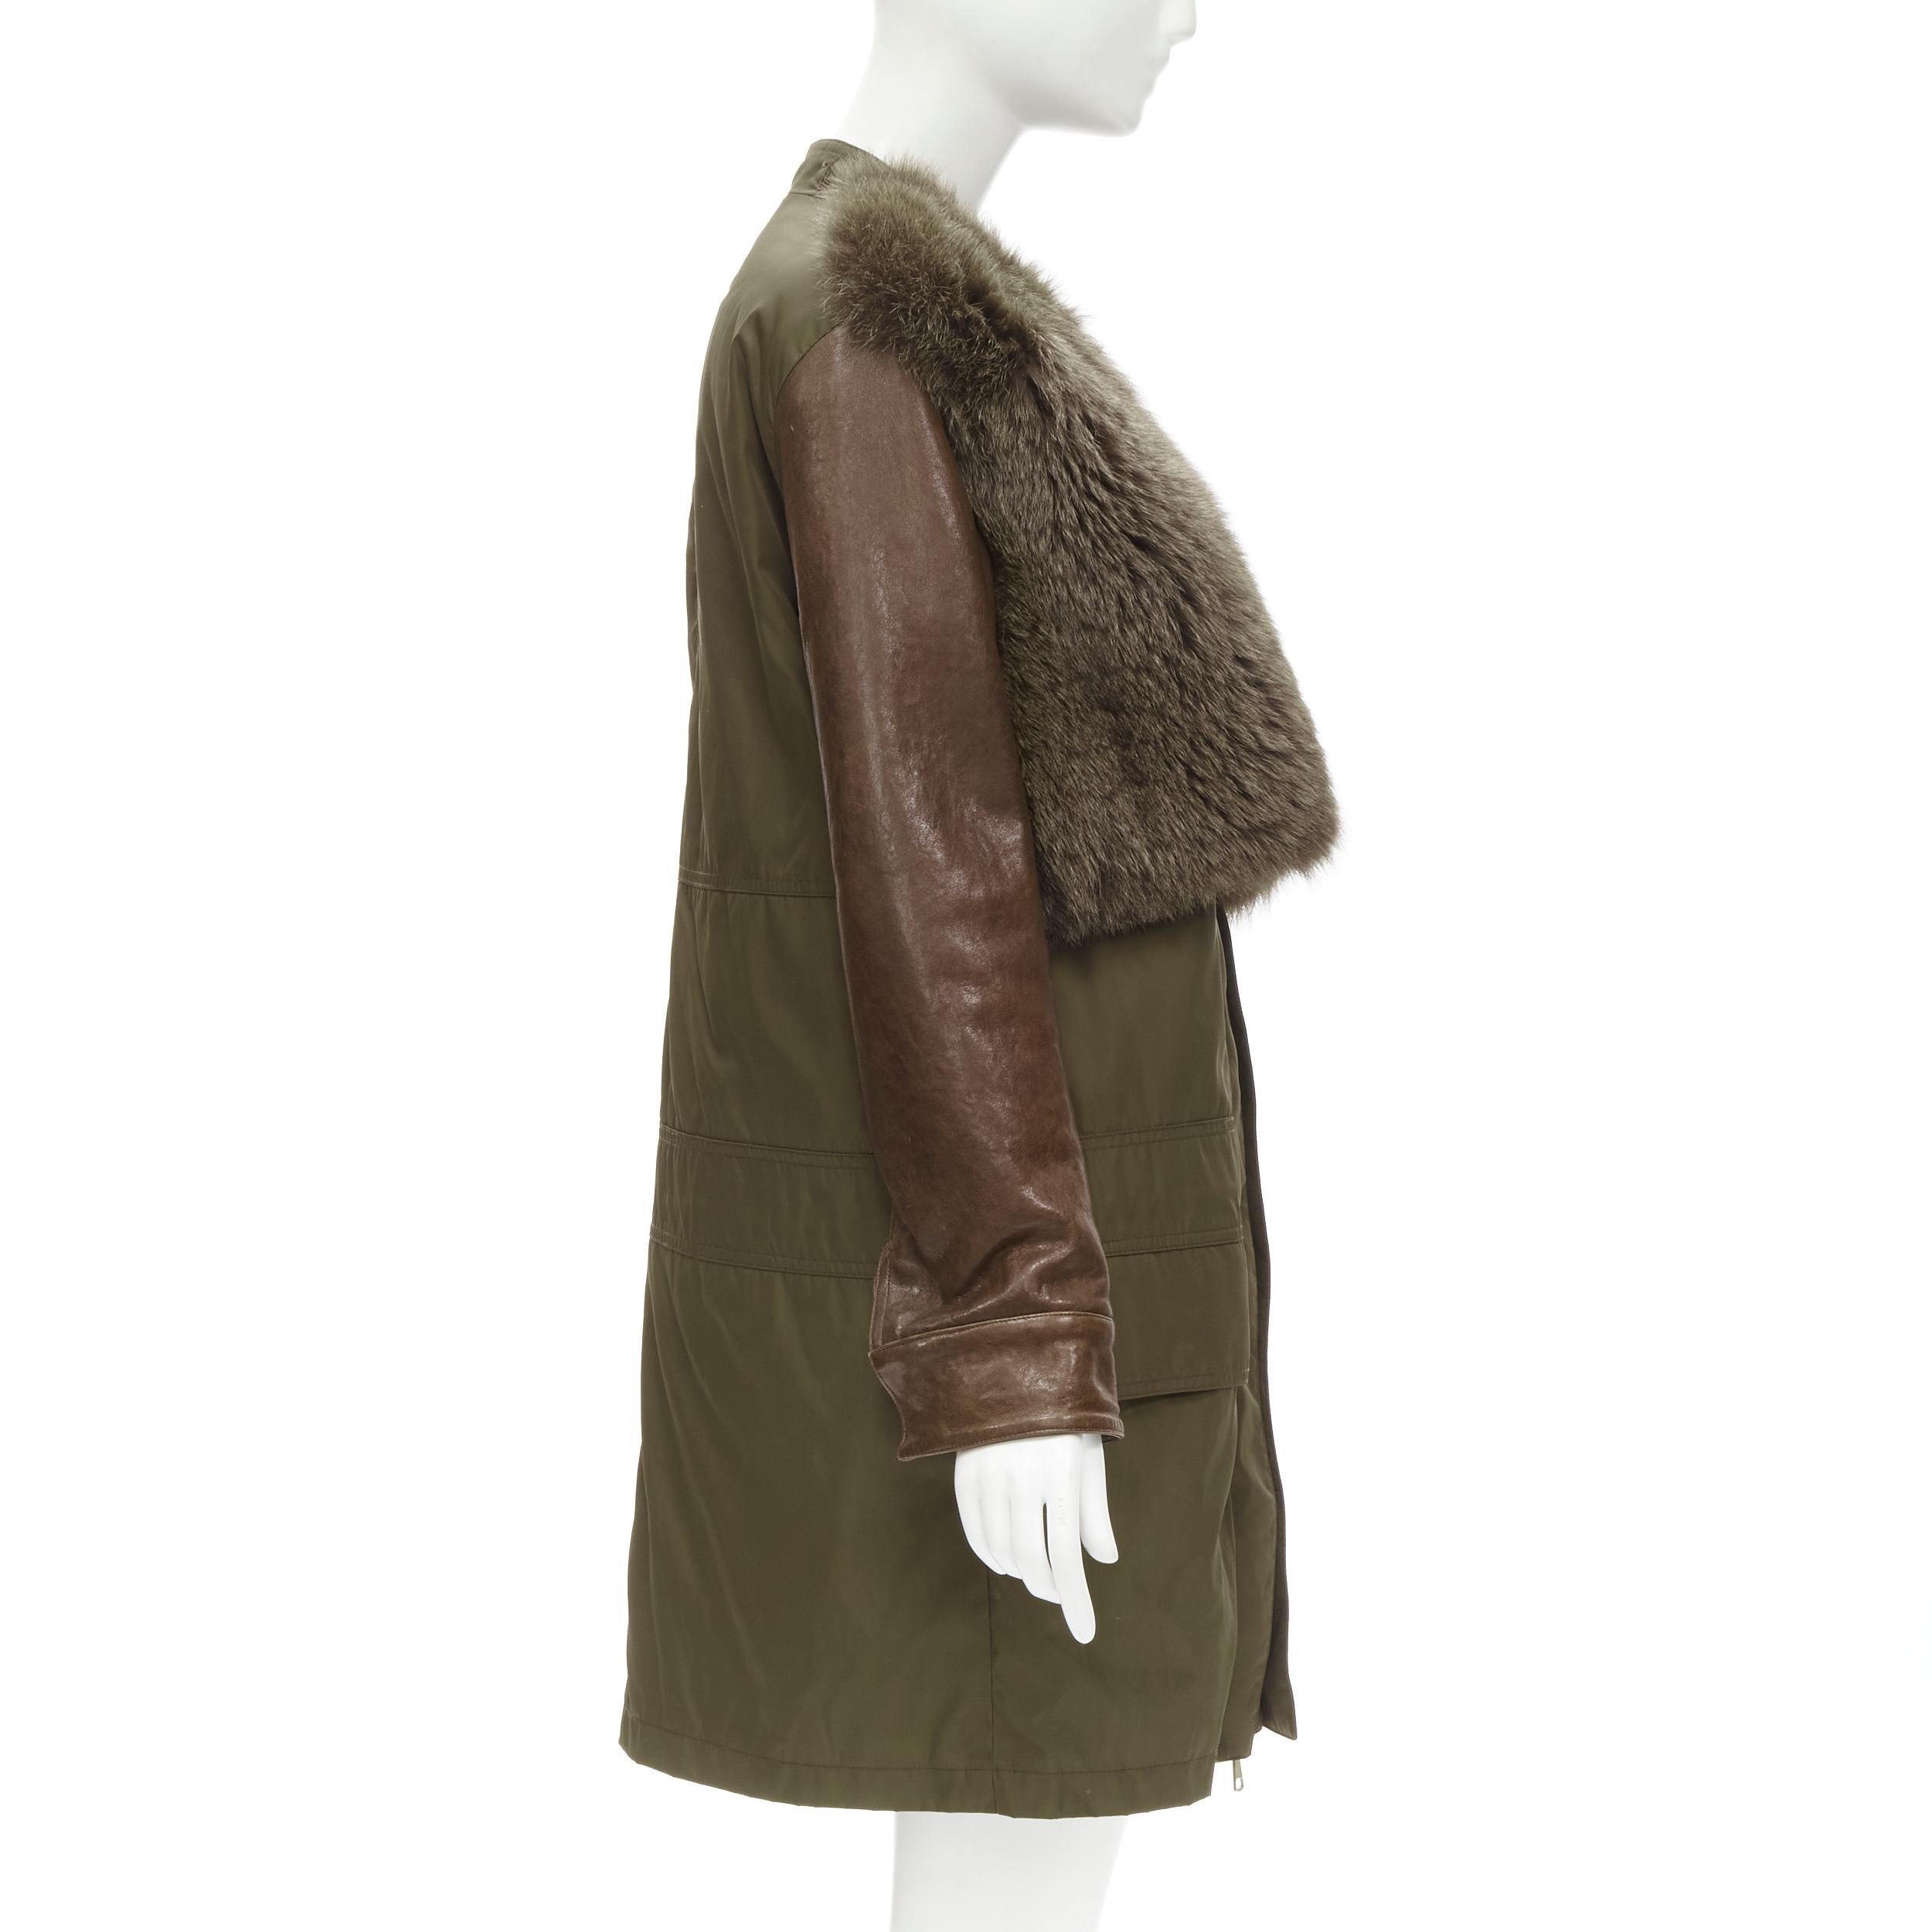 Black GIVENCHY Riccardo Tisci green leather sleeve fox fur anorak coat FR34 XS For Sale